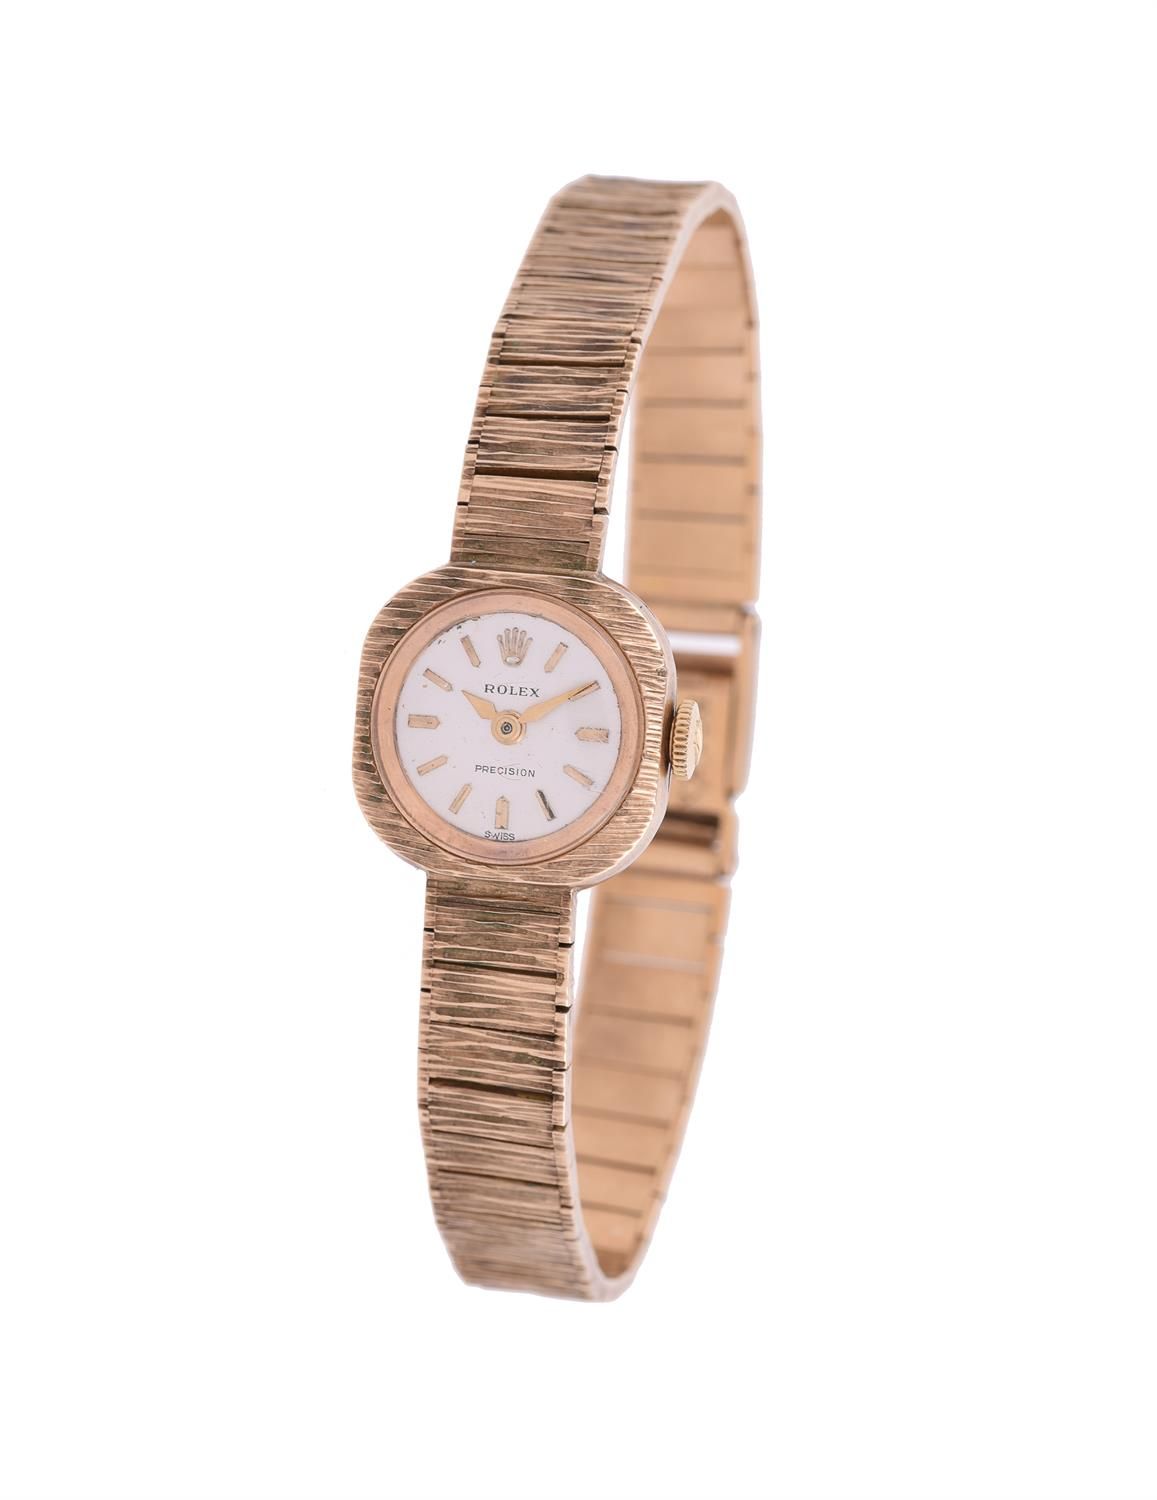 Rolex, Precision, Lady's 9 carat gold bracelet watch Rolex, Precision, Damenuhr &hellip;